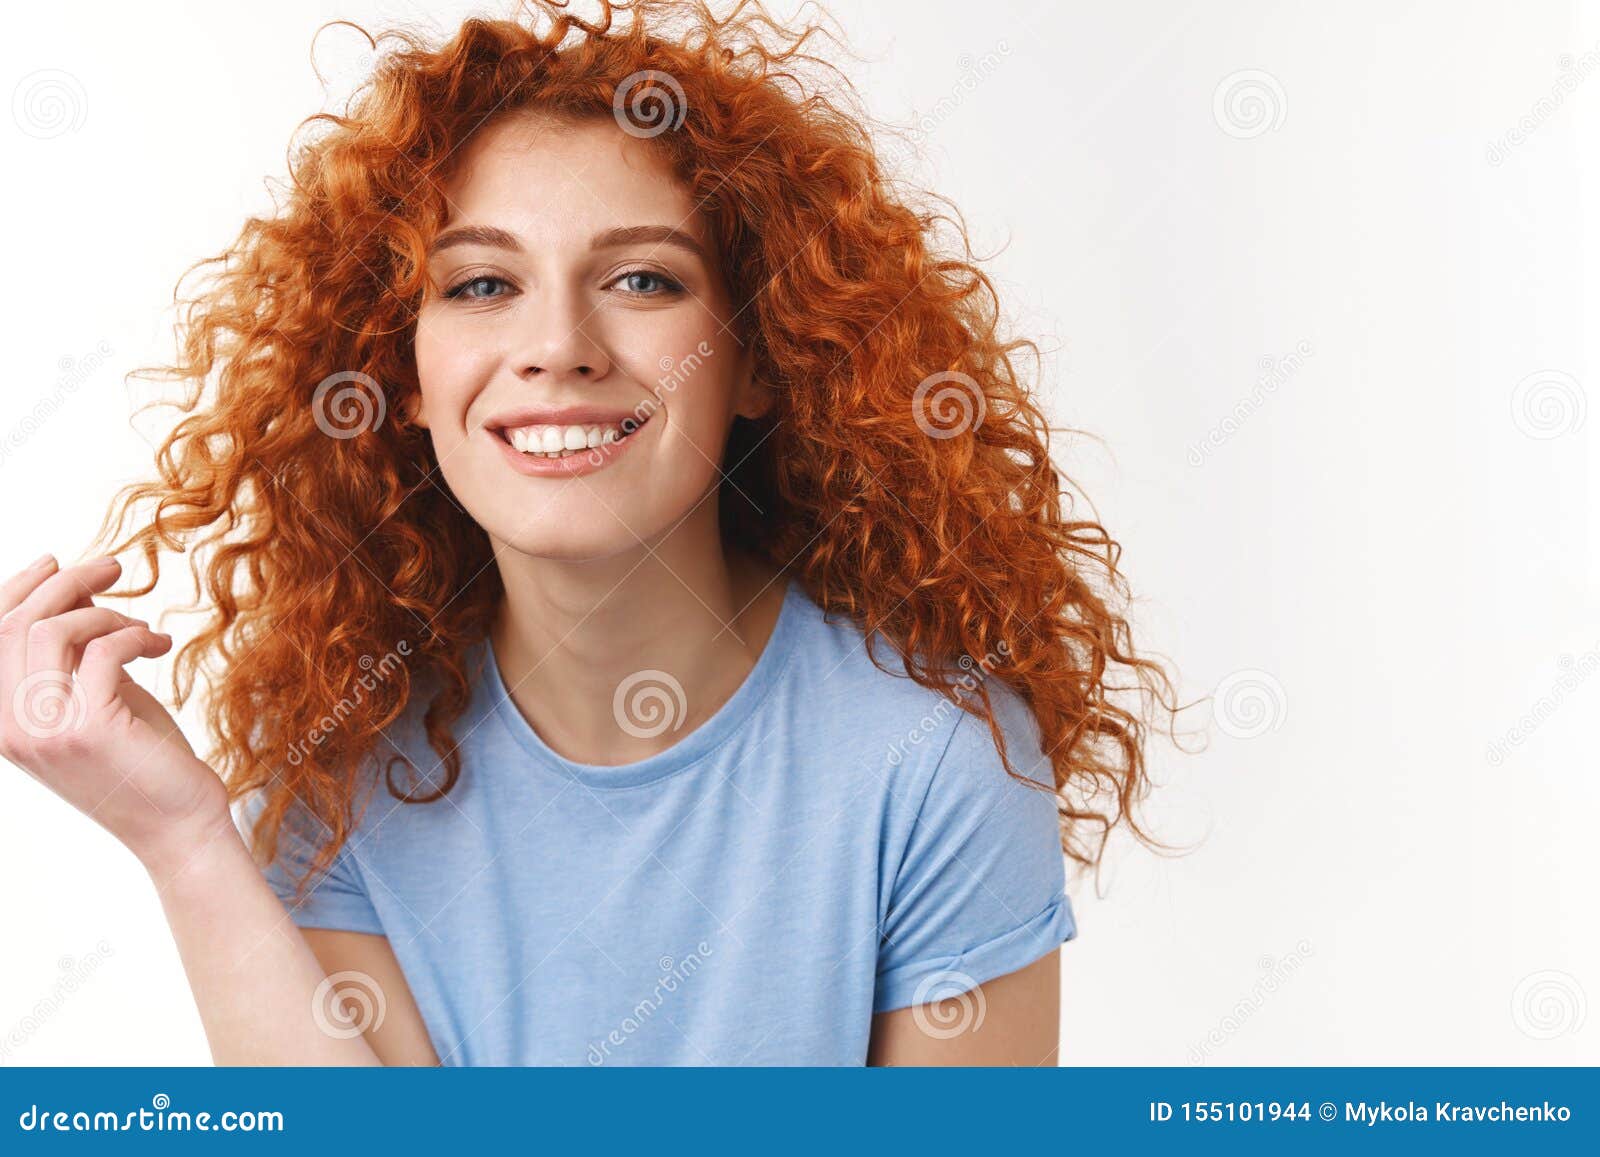 Natural redhead amateur